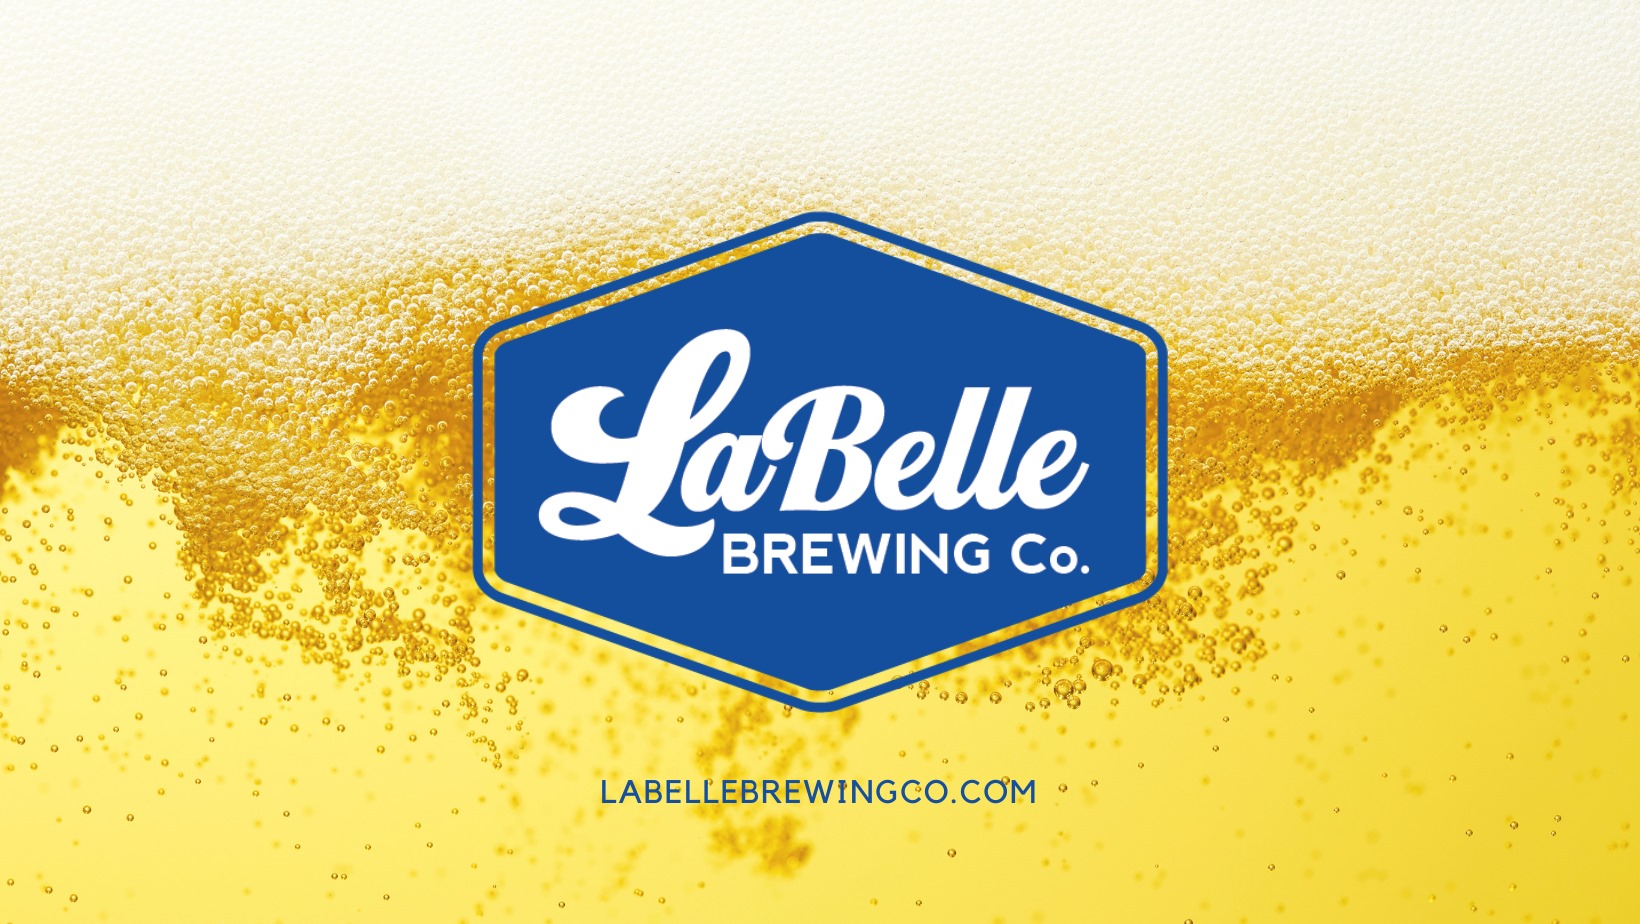 LaBelle Brewing Company